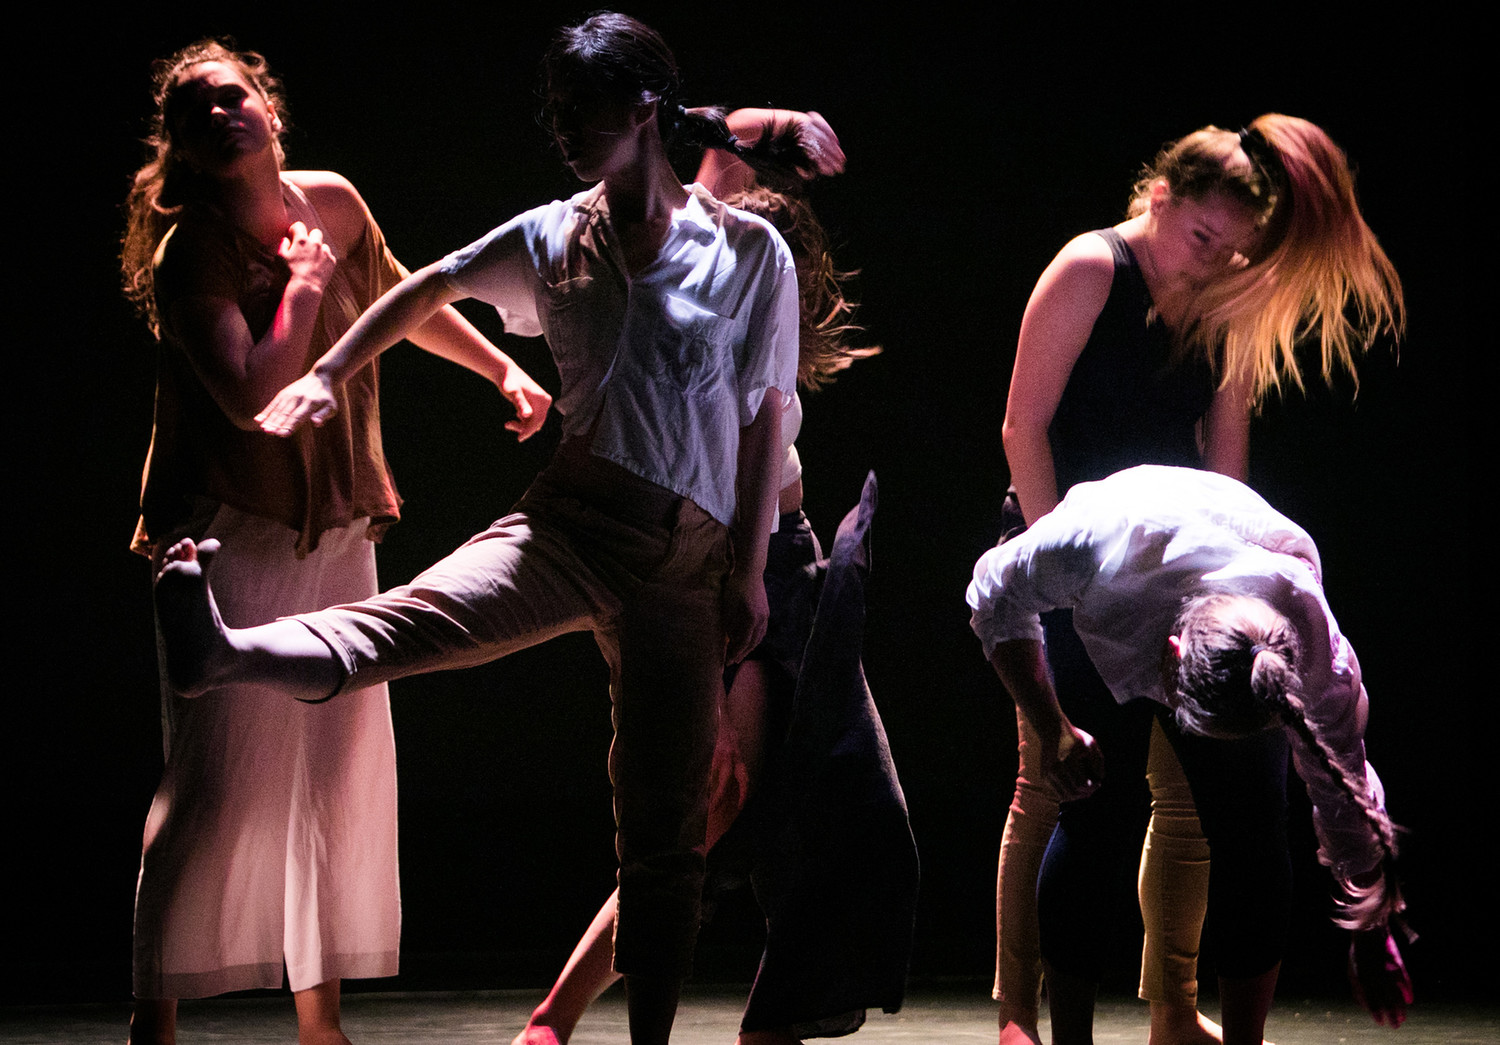 Five dancers onstage in dim lighting